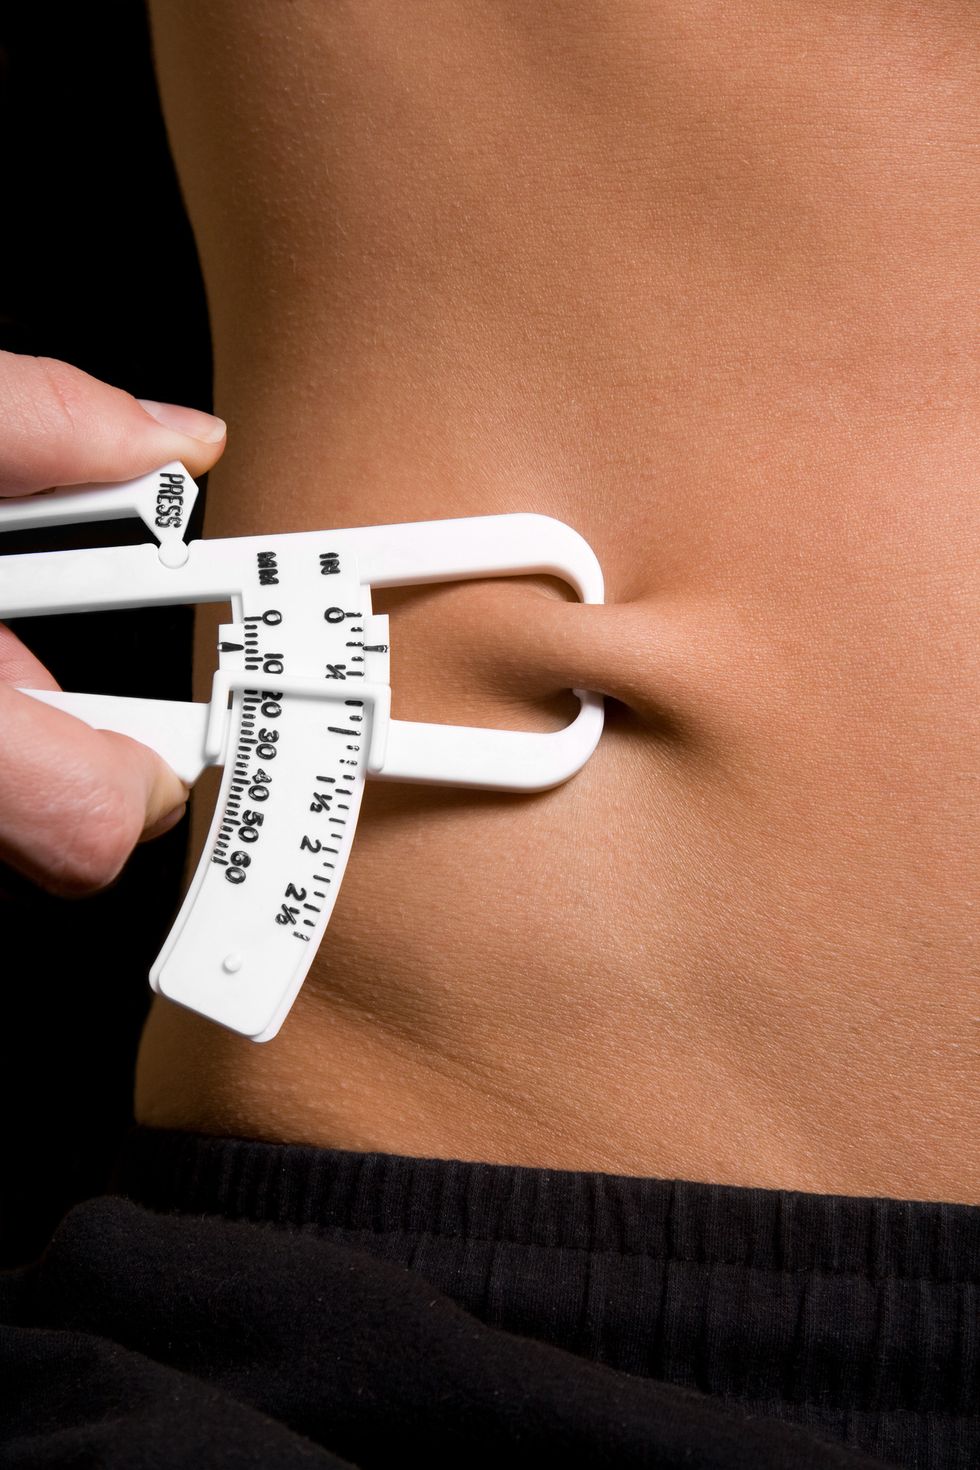 How to Measure body fat percentage (Digital Body Fat Caliper